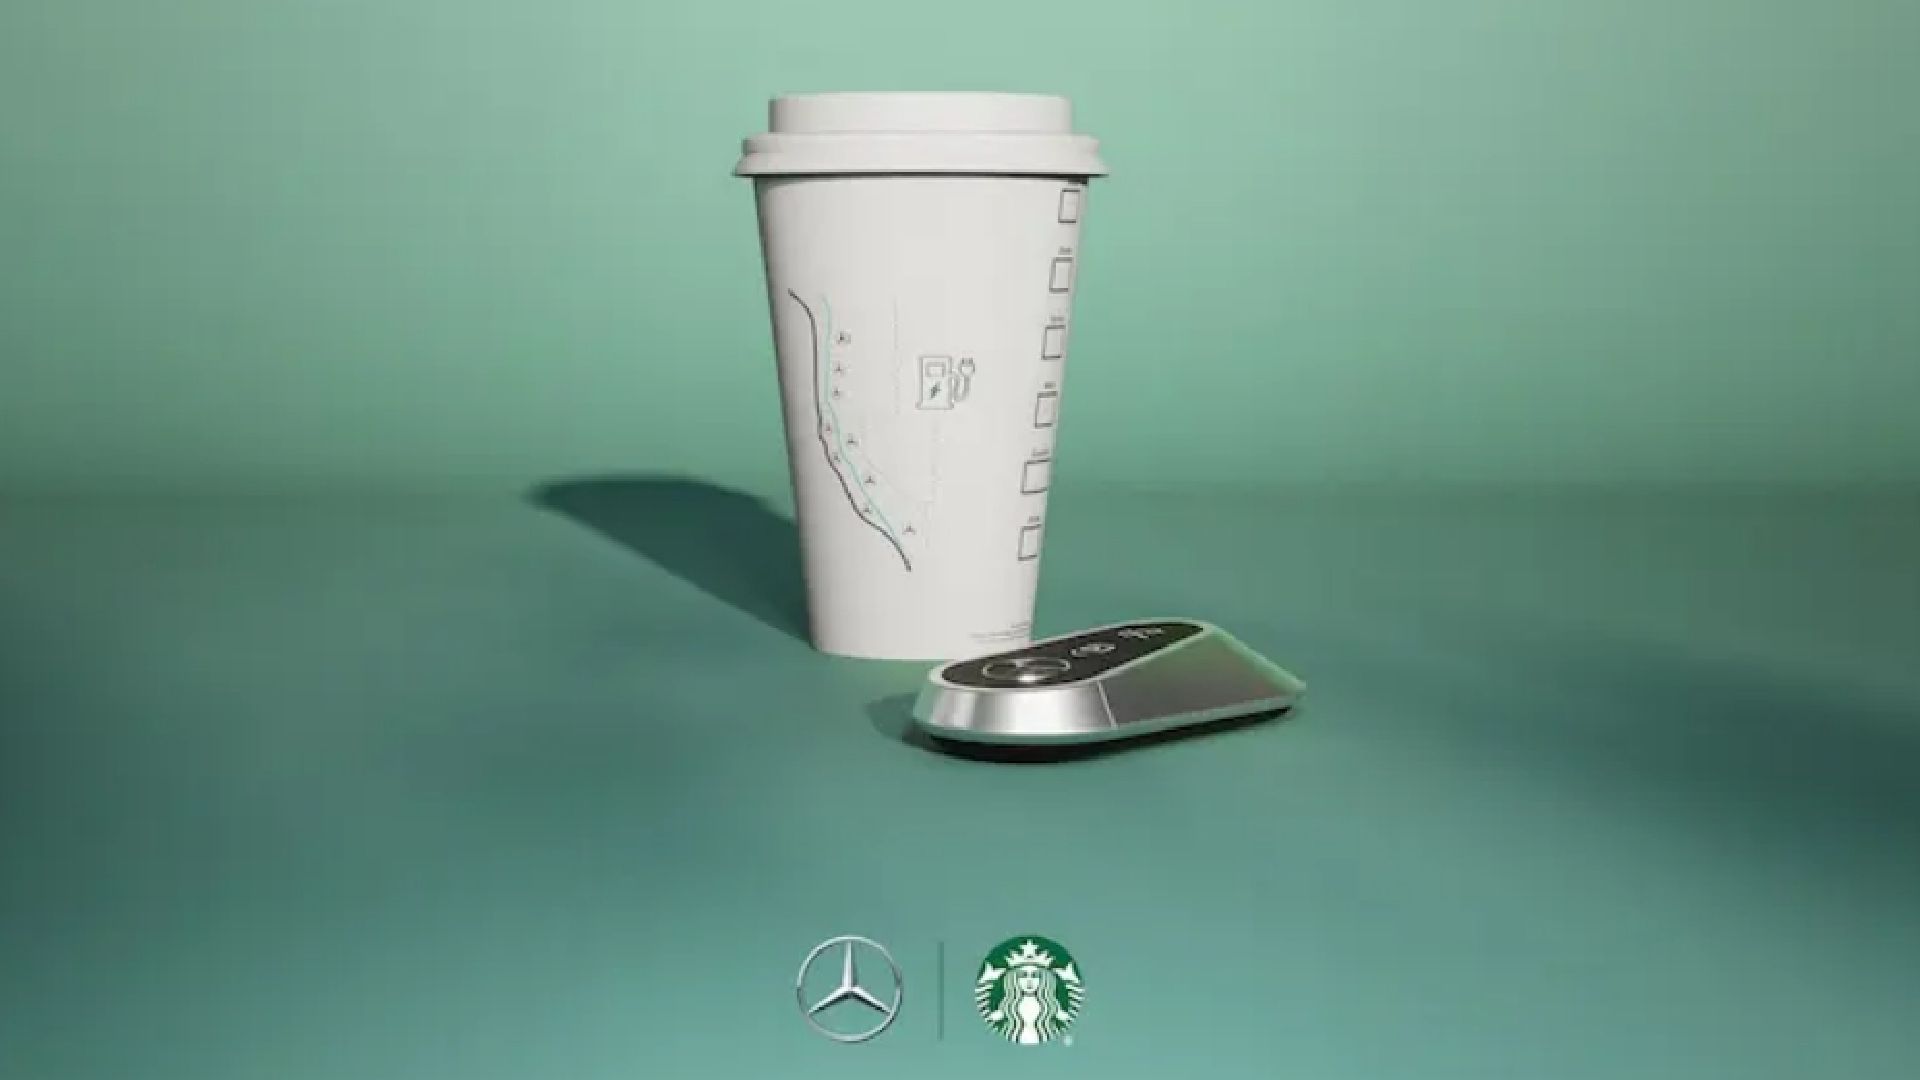 Mercedes to set up EV charging stations at Starbucks (Source: Starbucks)